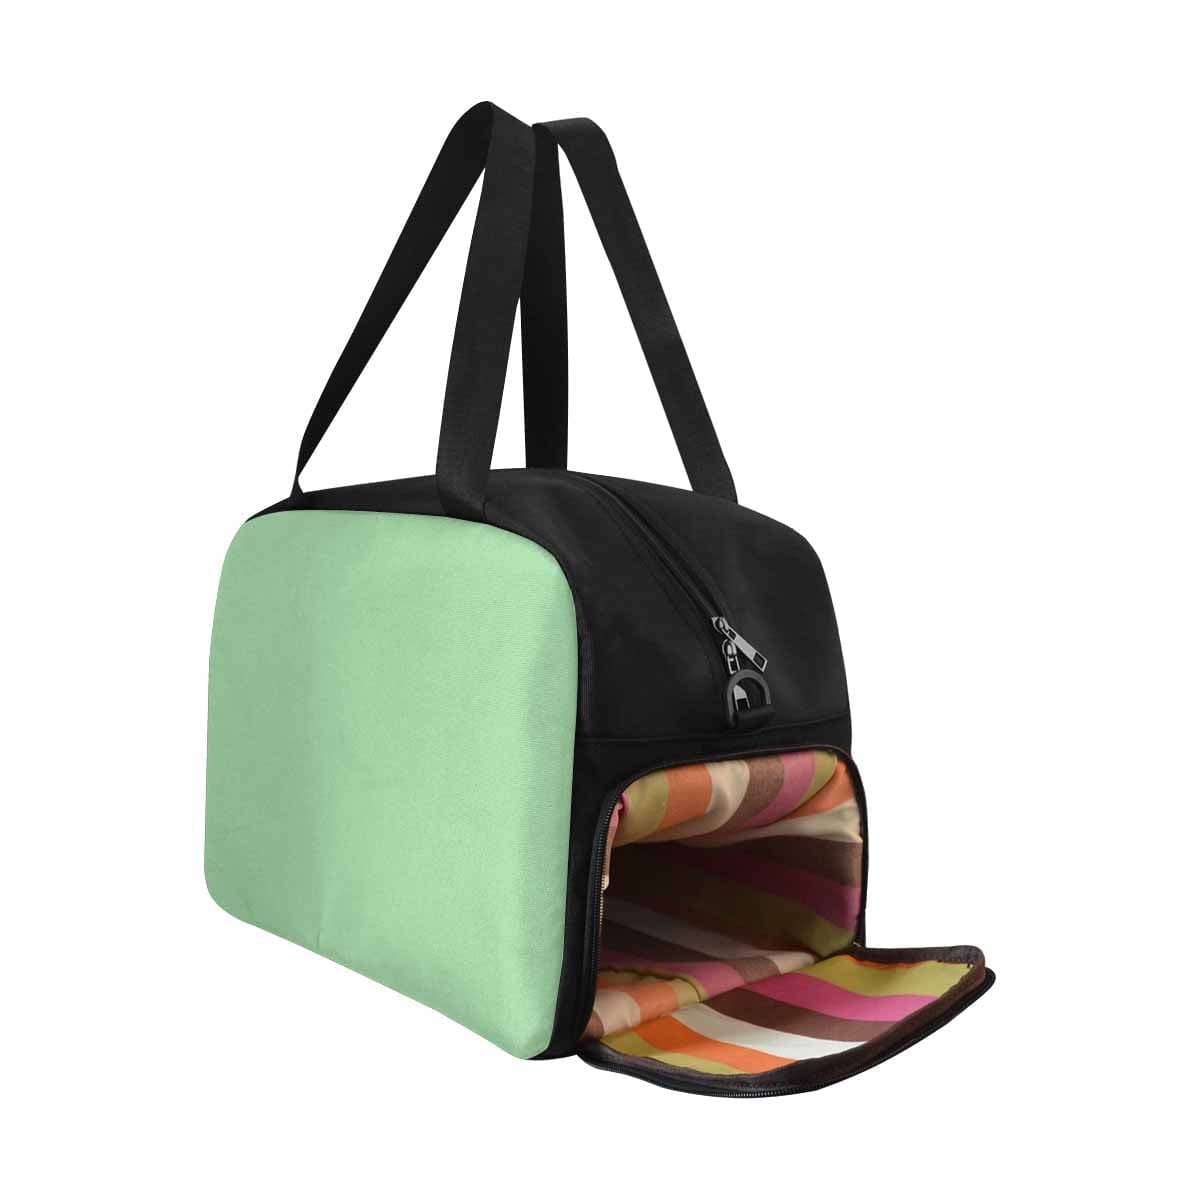 Celadon Green Tote And Crossbody Travel Bag - Bags | Travel Bags | Crossbody